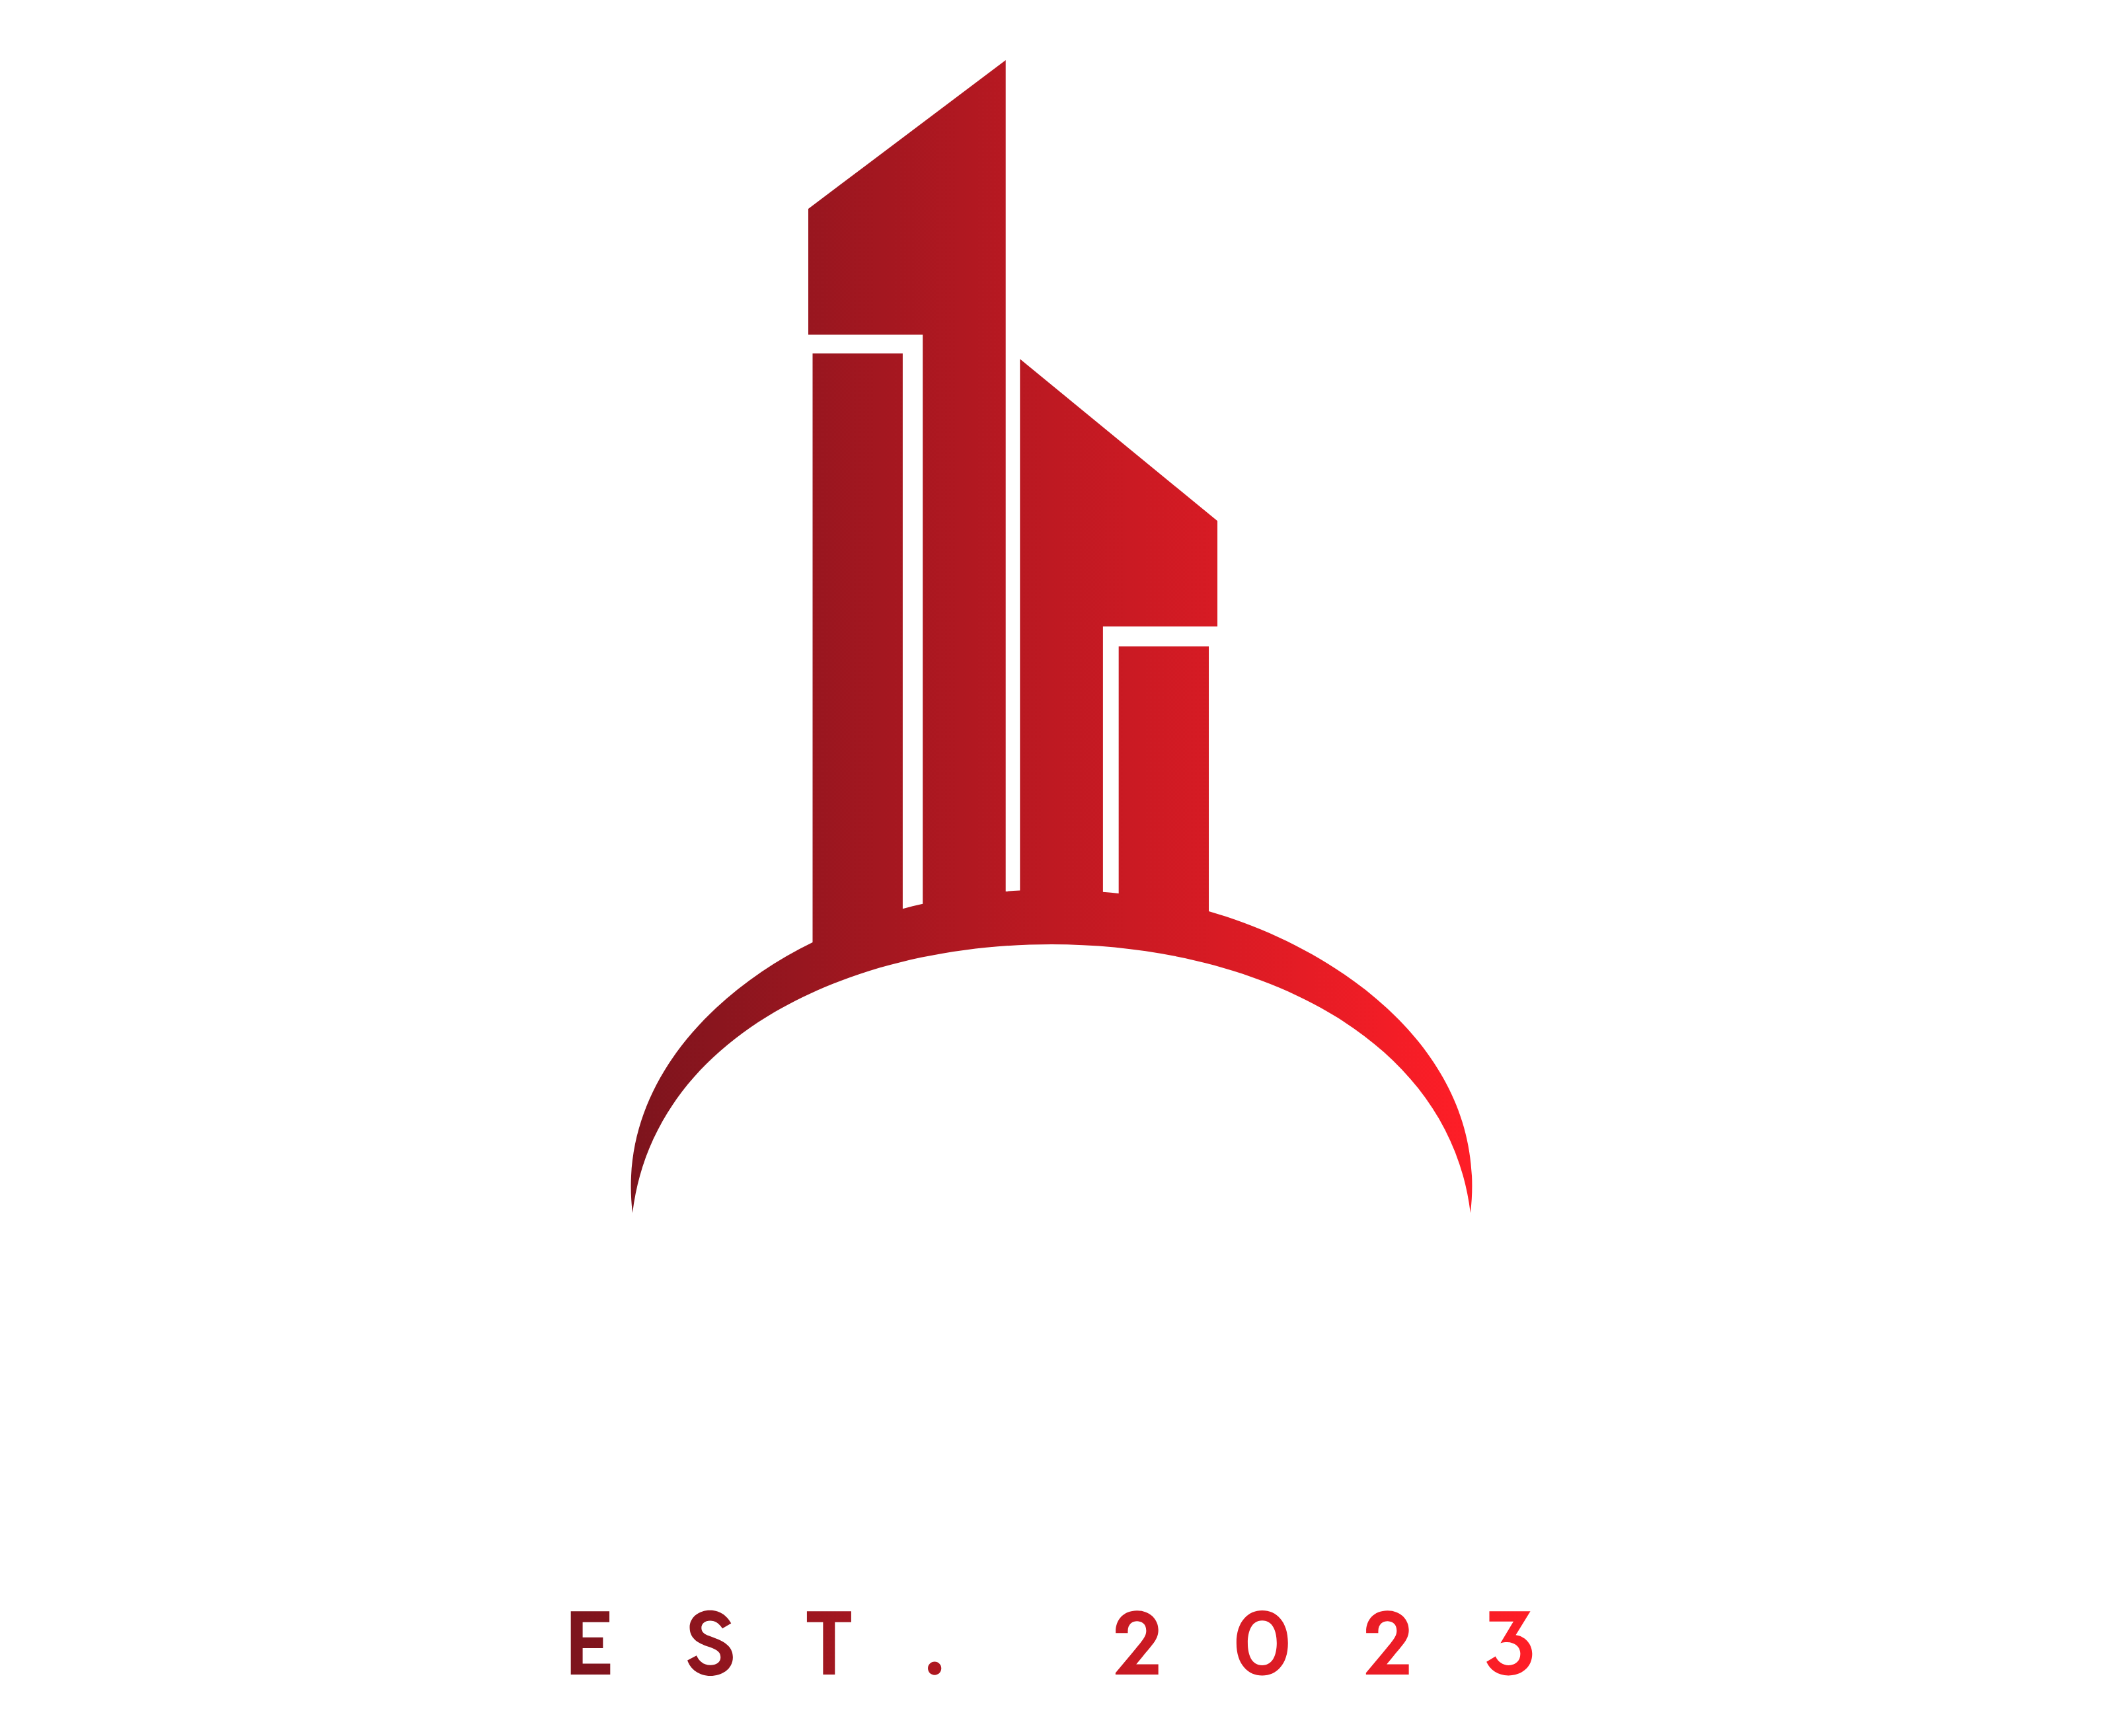 Milner Group, LLC